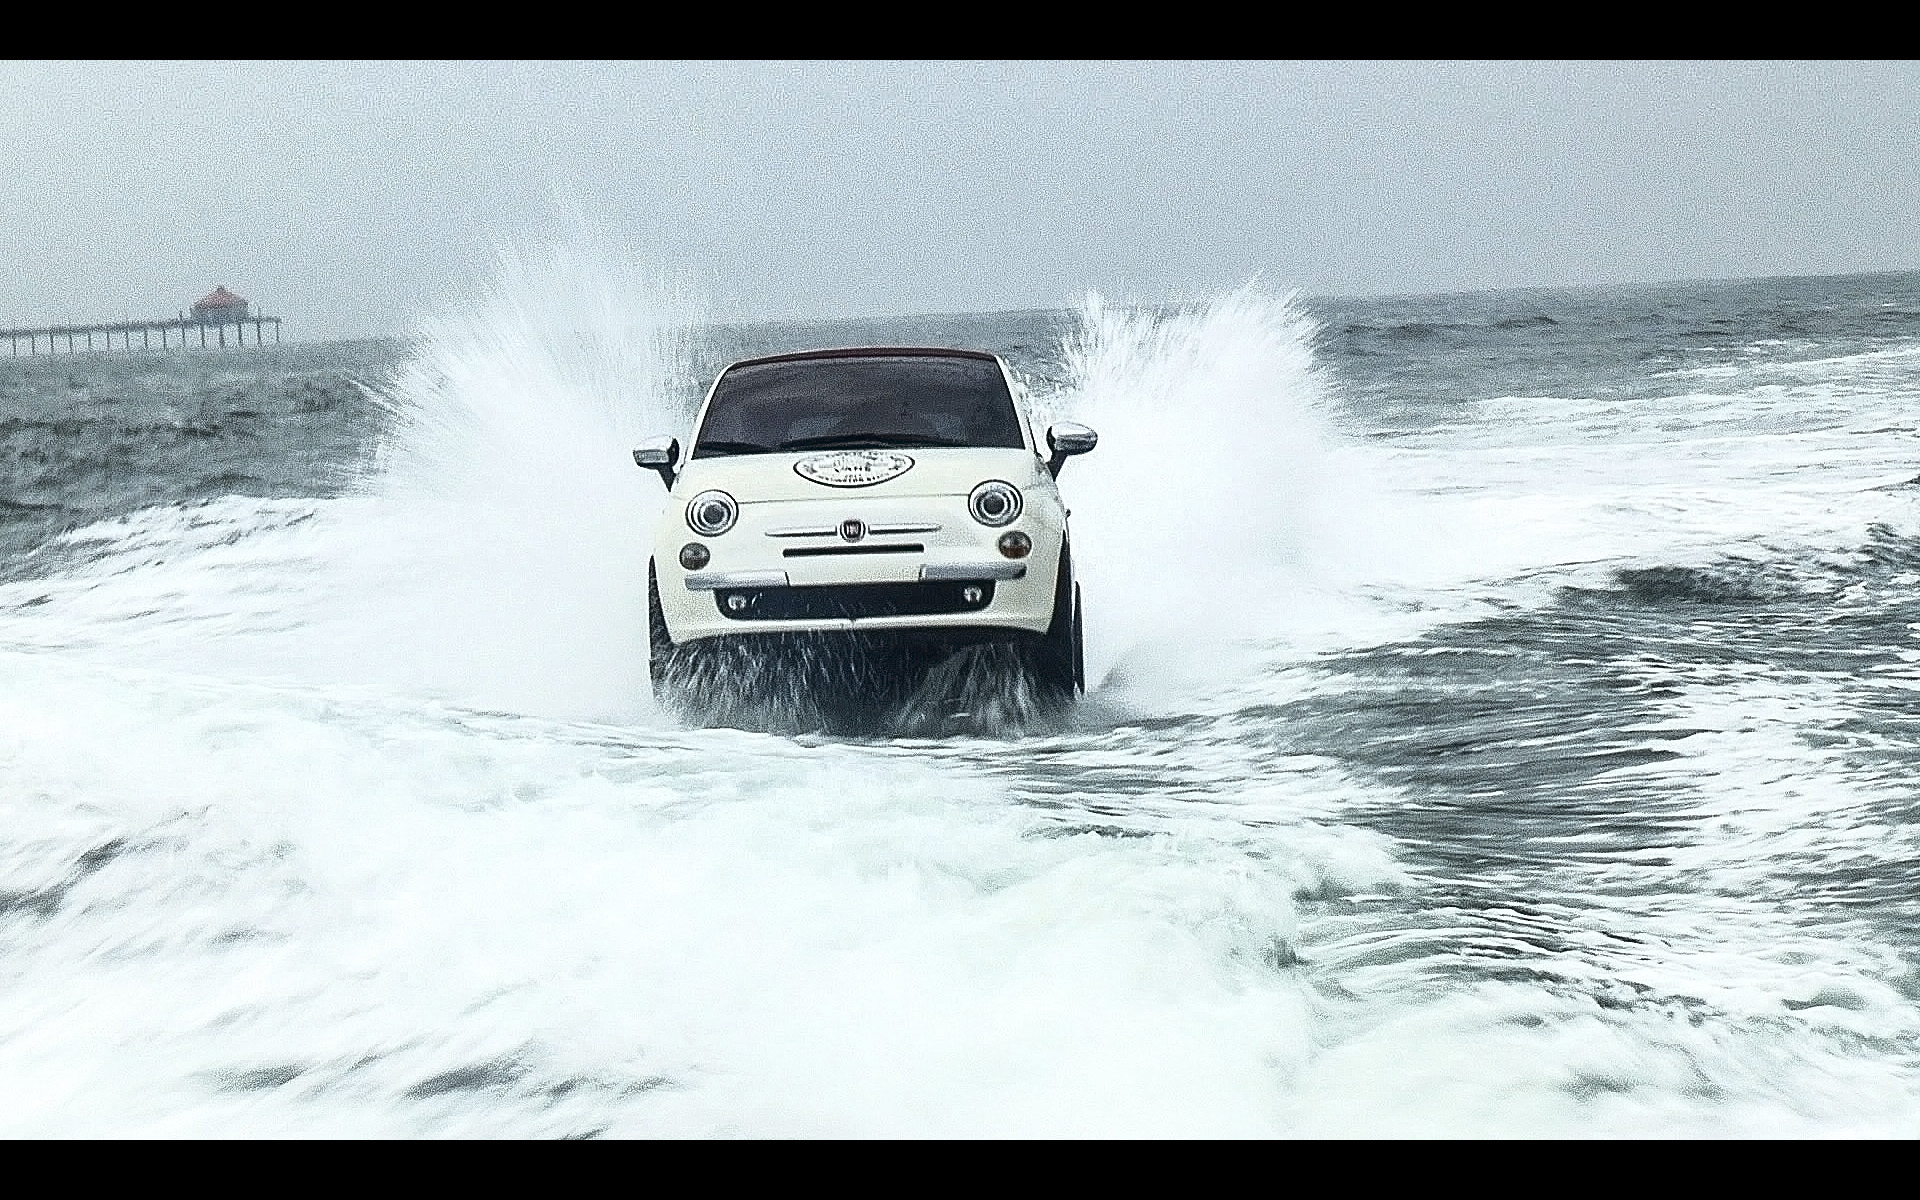 2013, Fiat, 500, Personal, Watercraft, Boat Wallpaper